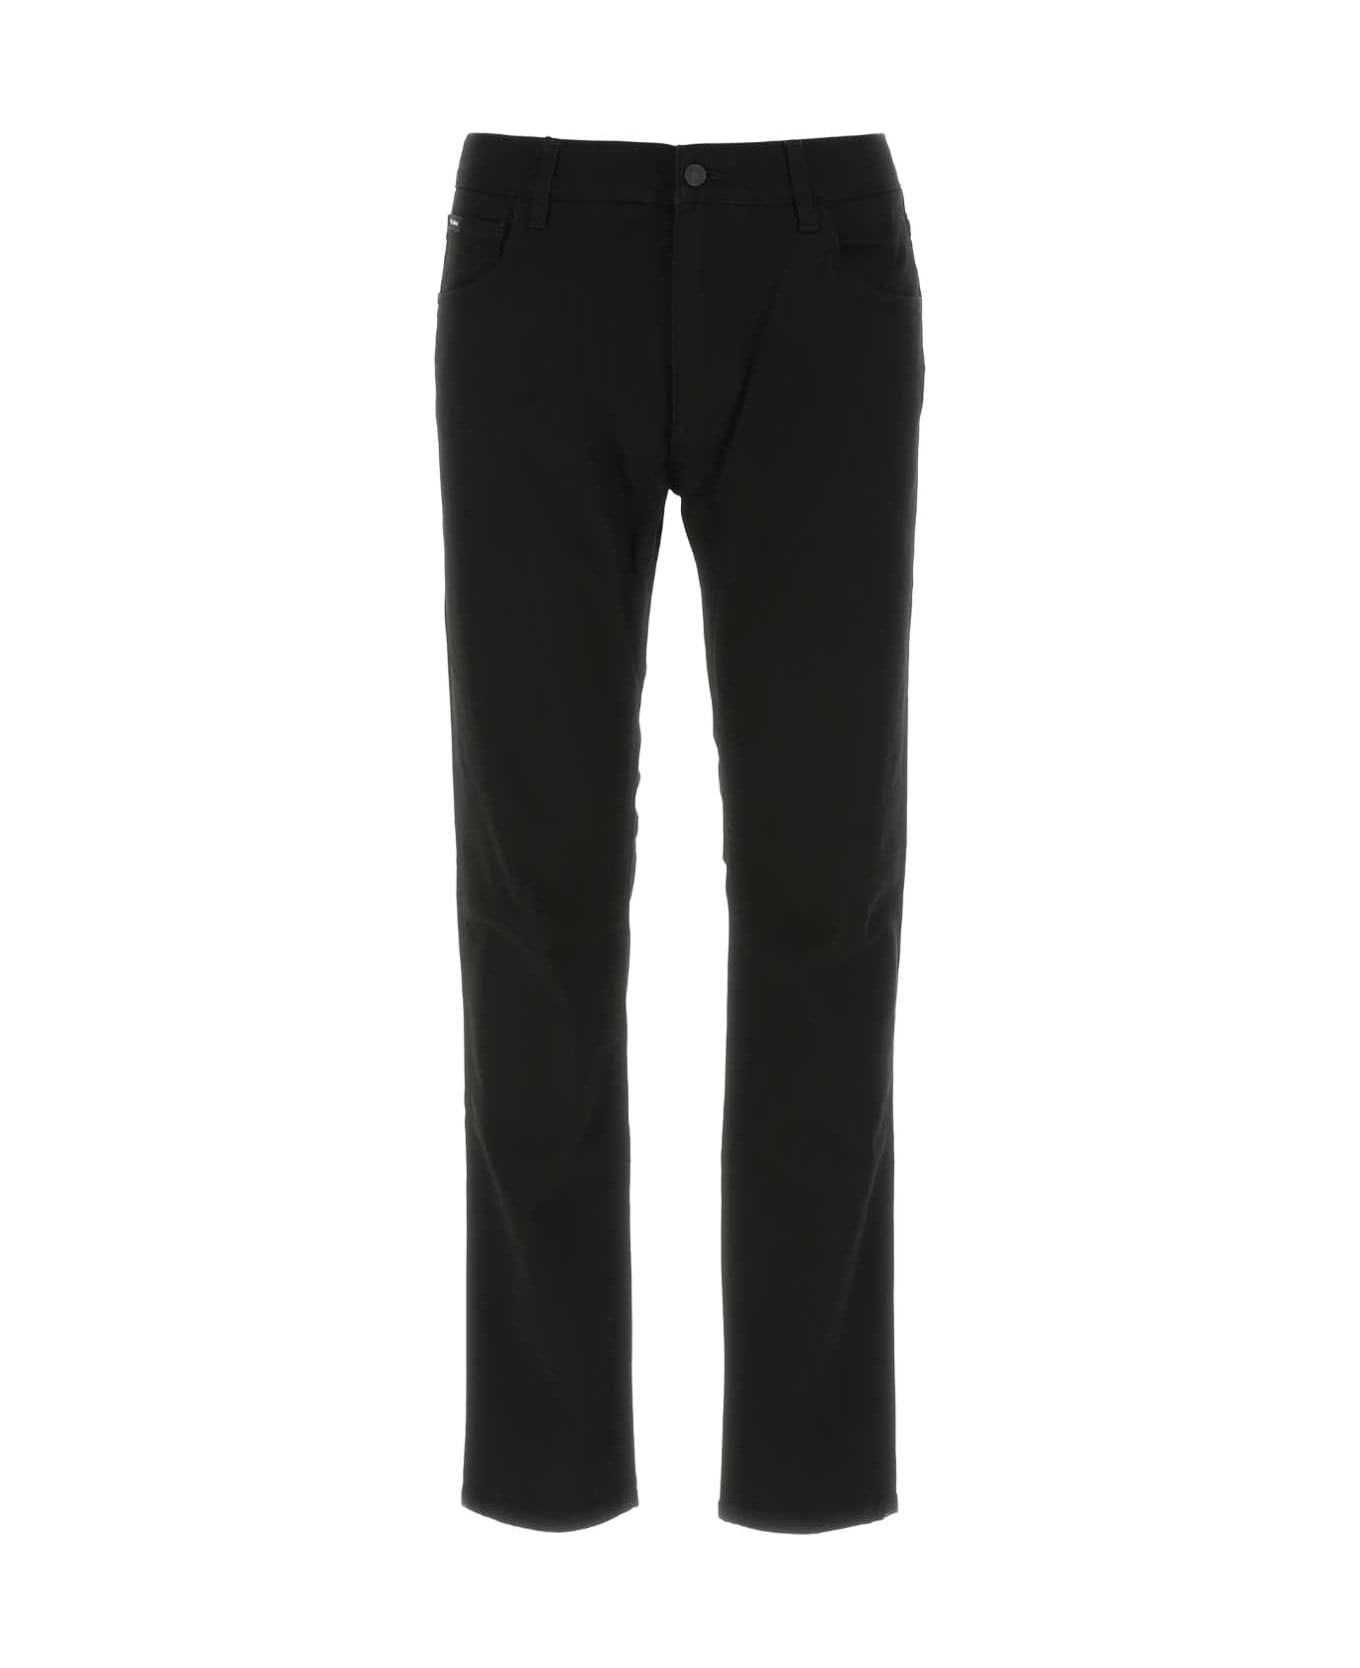 Dolce & Gabbana Black Stretch Cotton Pant - S9001